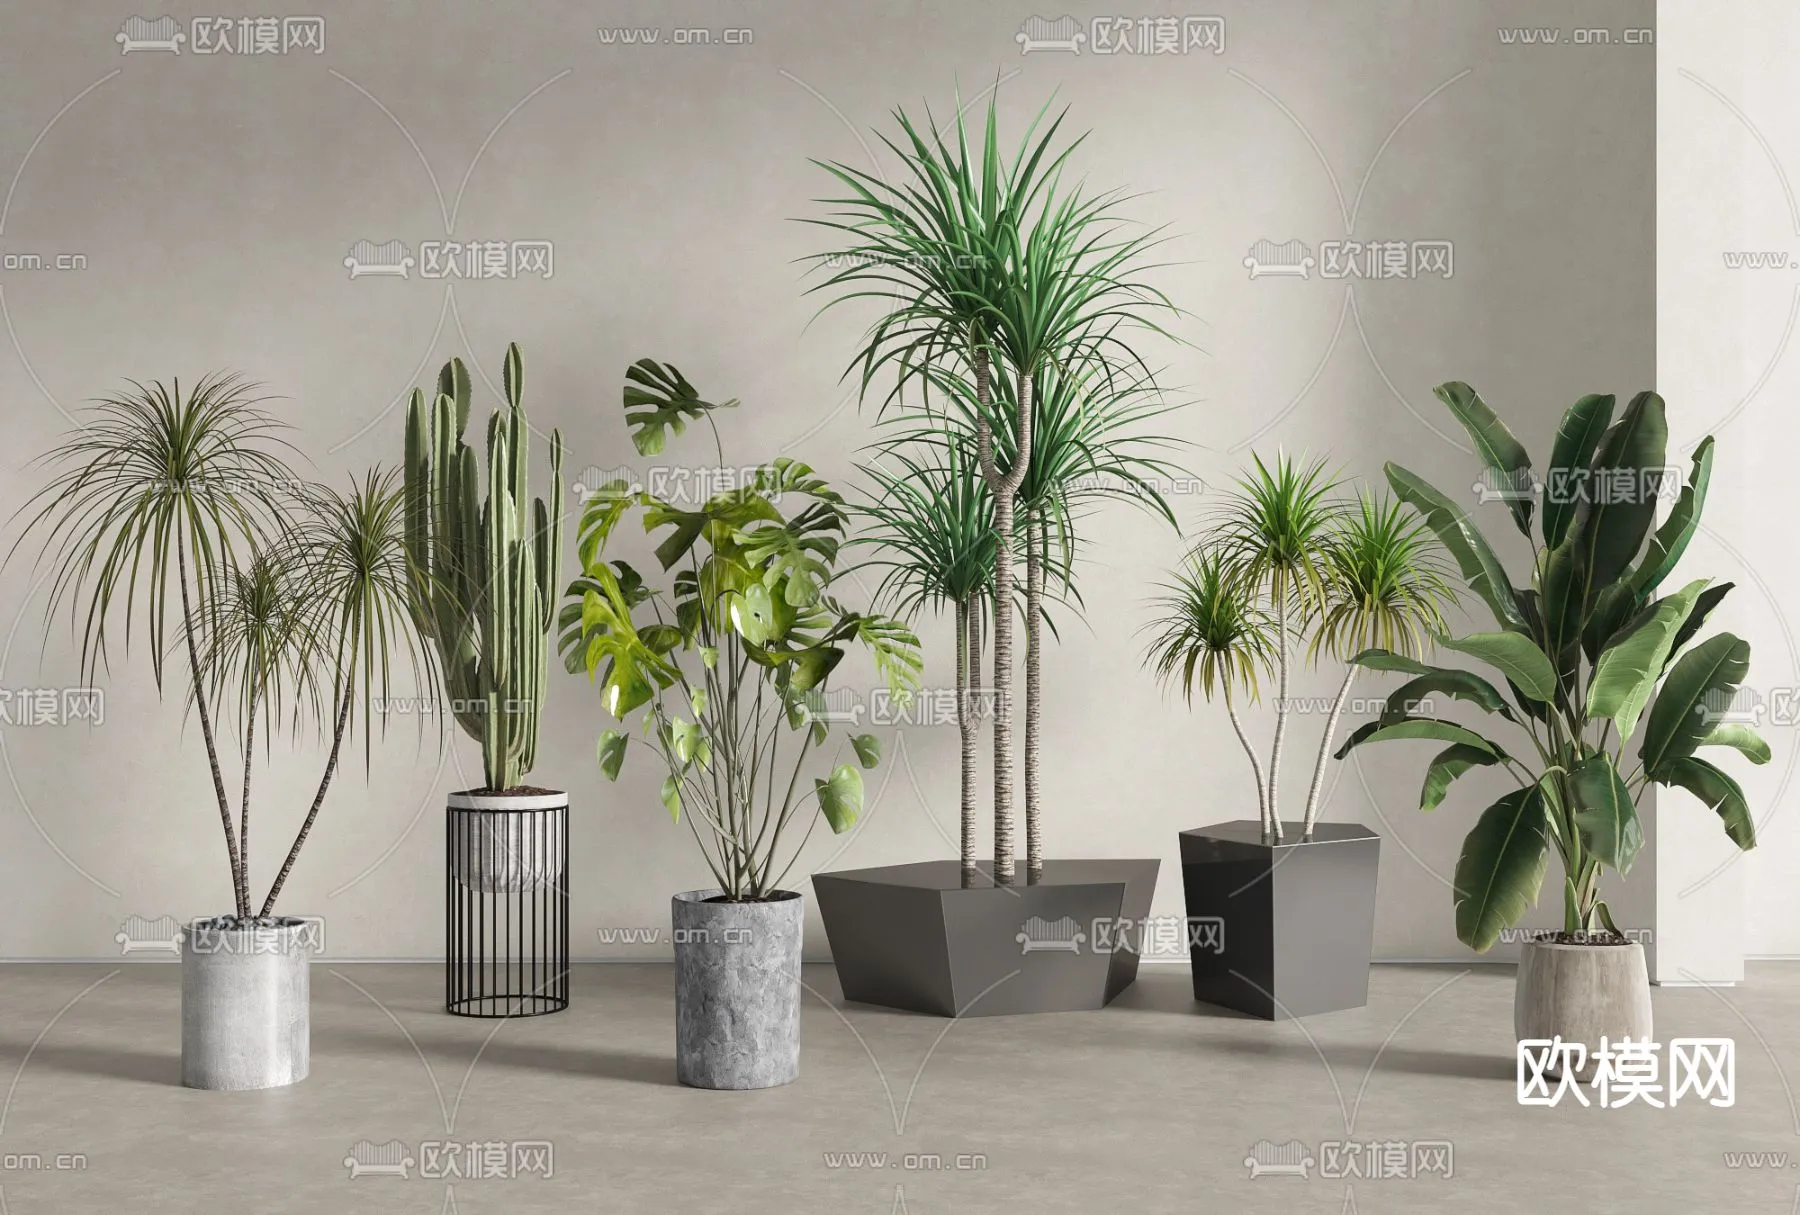 Plant – VRAY / CORONA – 3D MODEL – 458